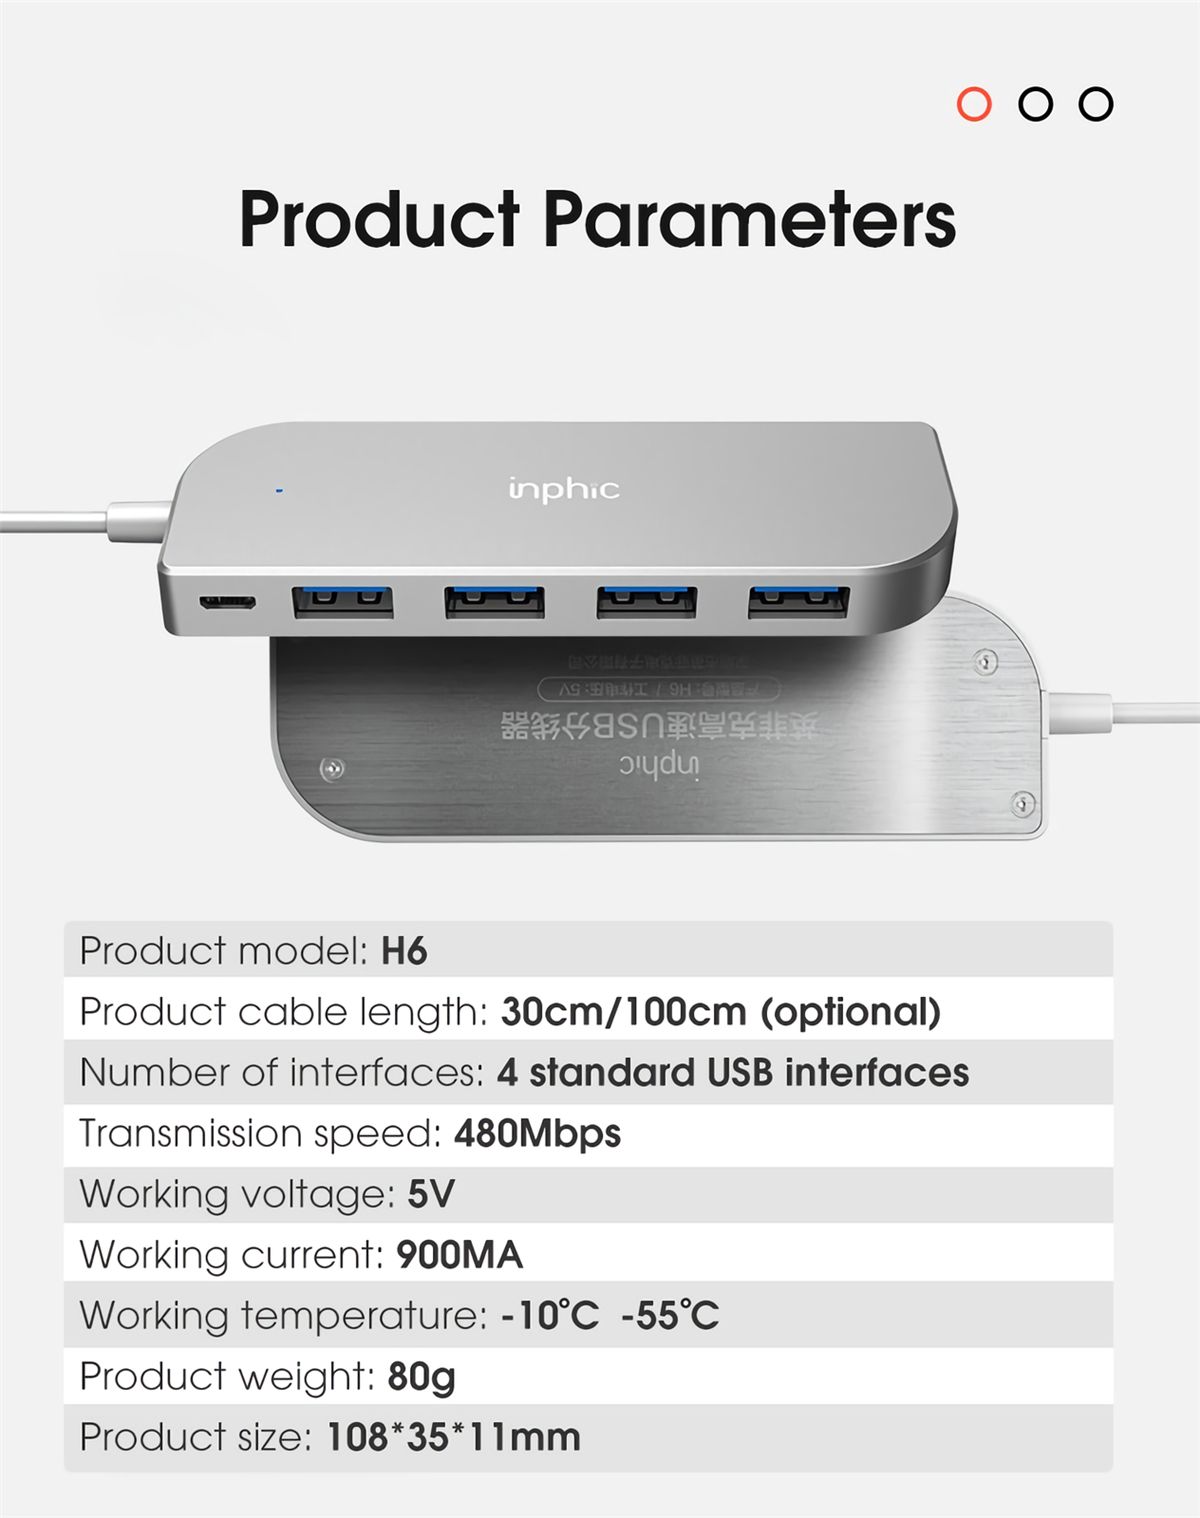 Inphic-H6-USB-Hub-USB20-High-Speed-Docking-Station-Data-Transmission-Adapter-Converter-for-Keyboard--1766598